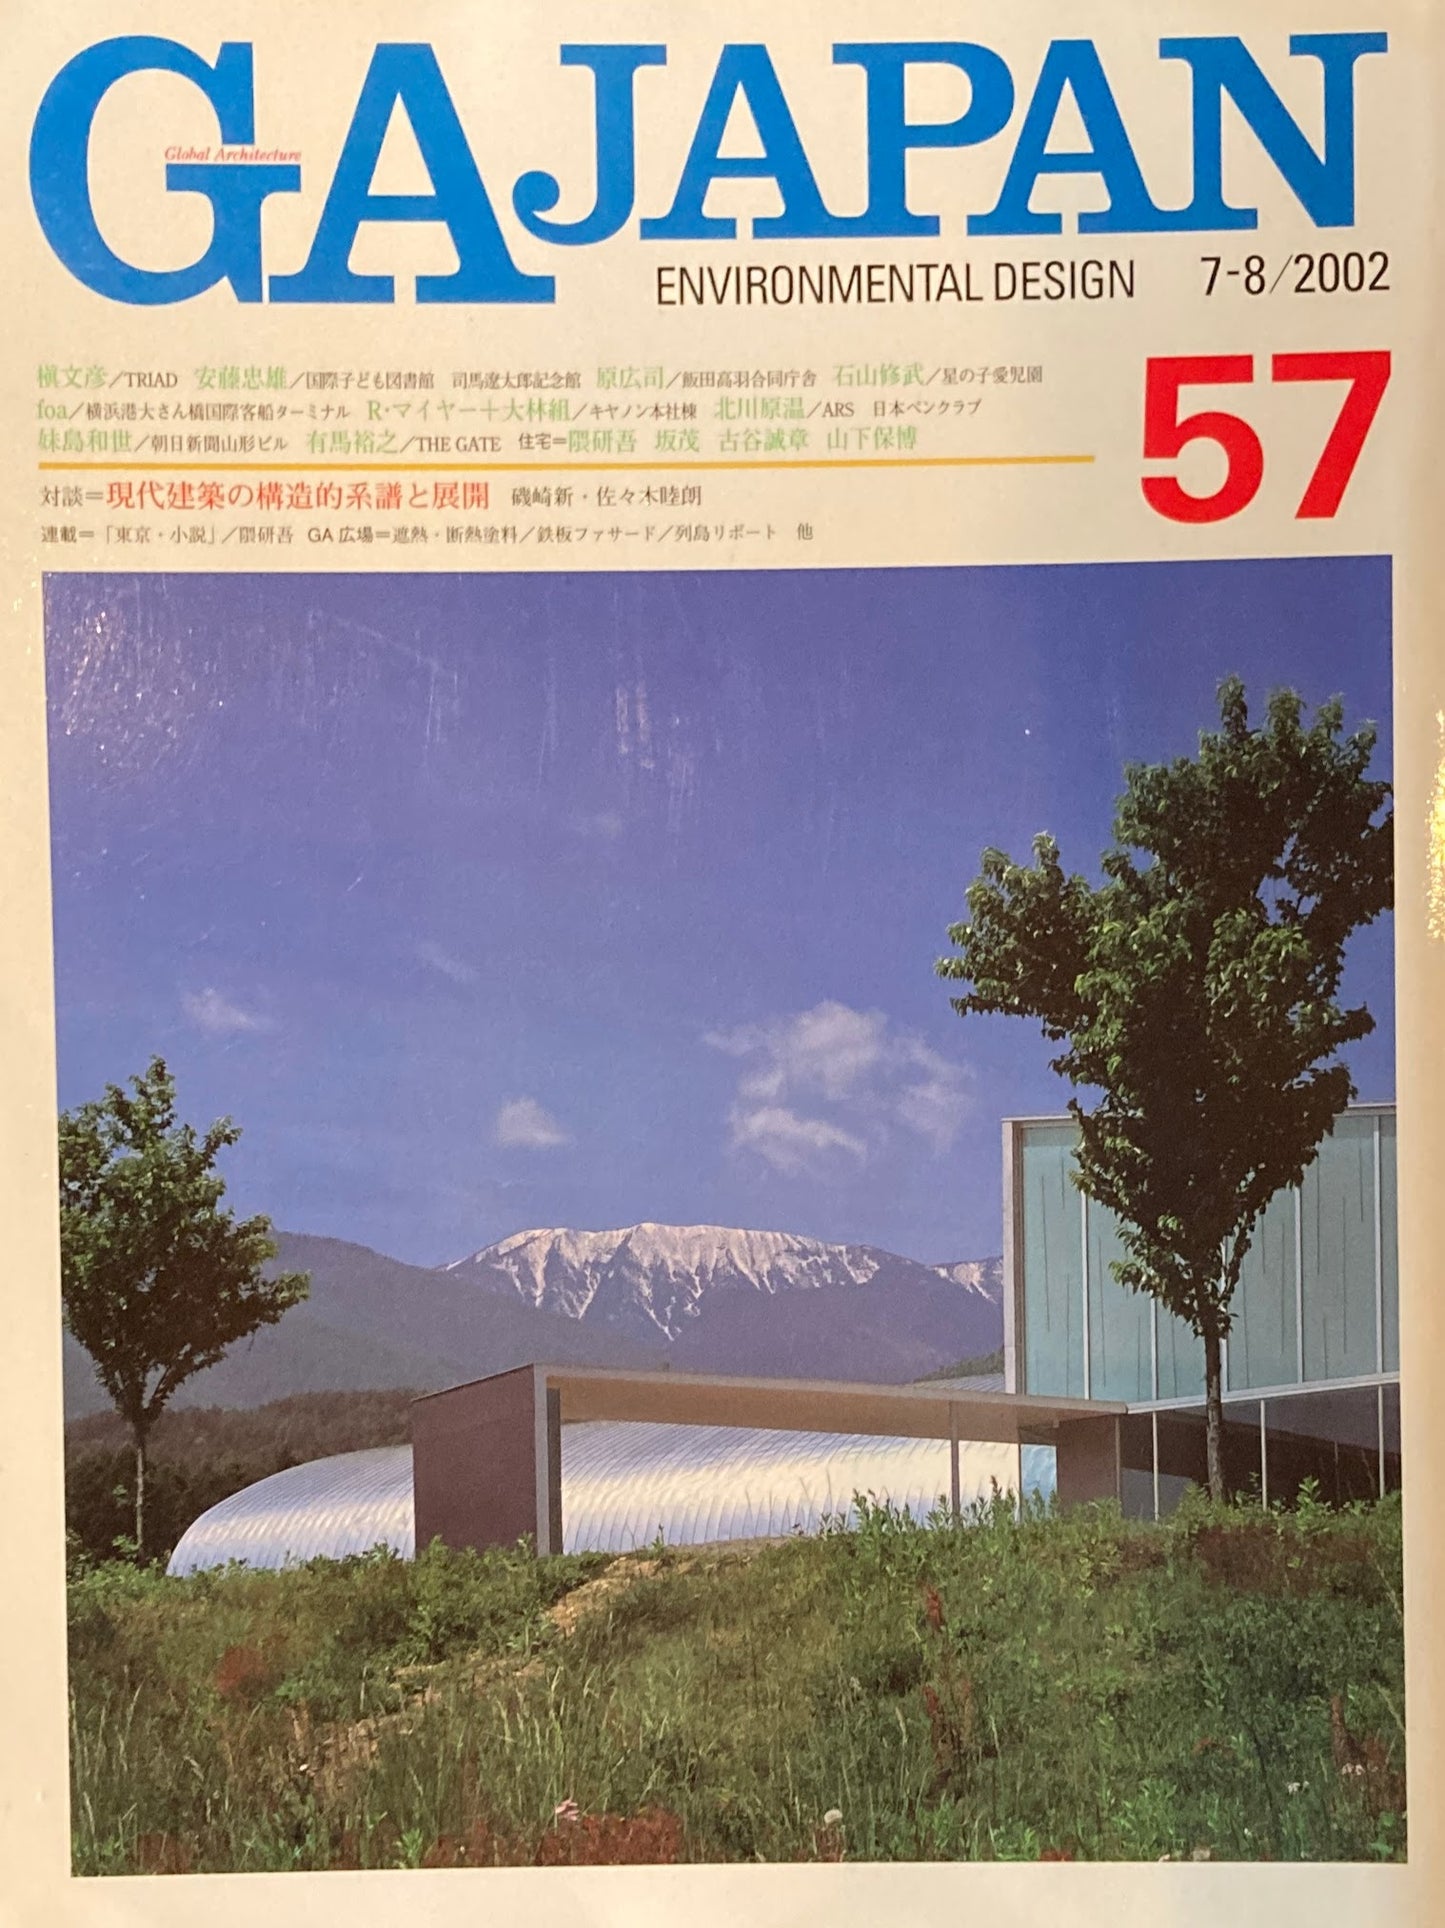 GA JAPAN 57　2002年/7-8　対談　現代建築の構造的系譜と展開